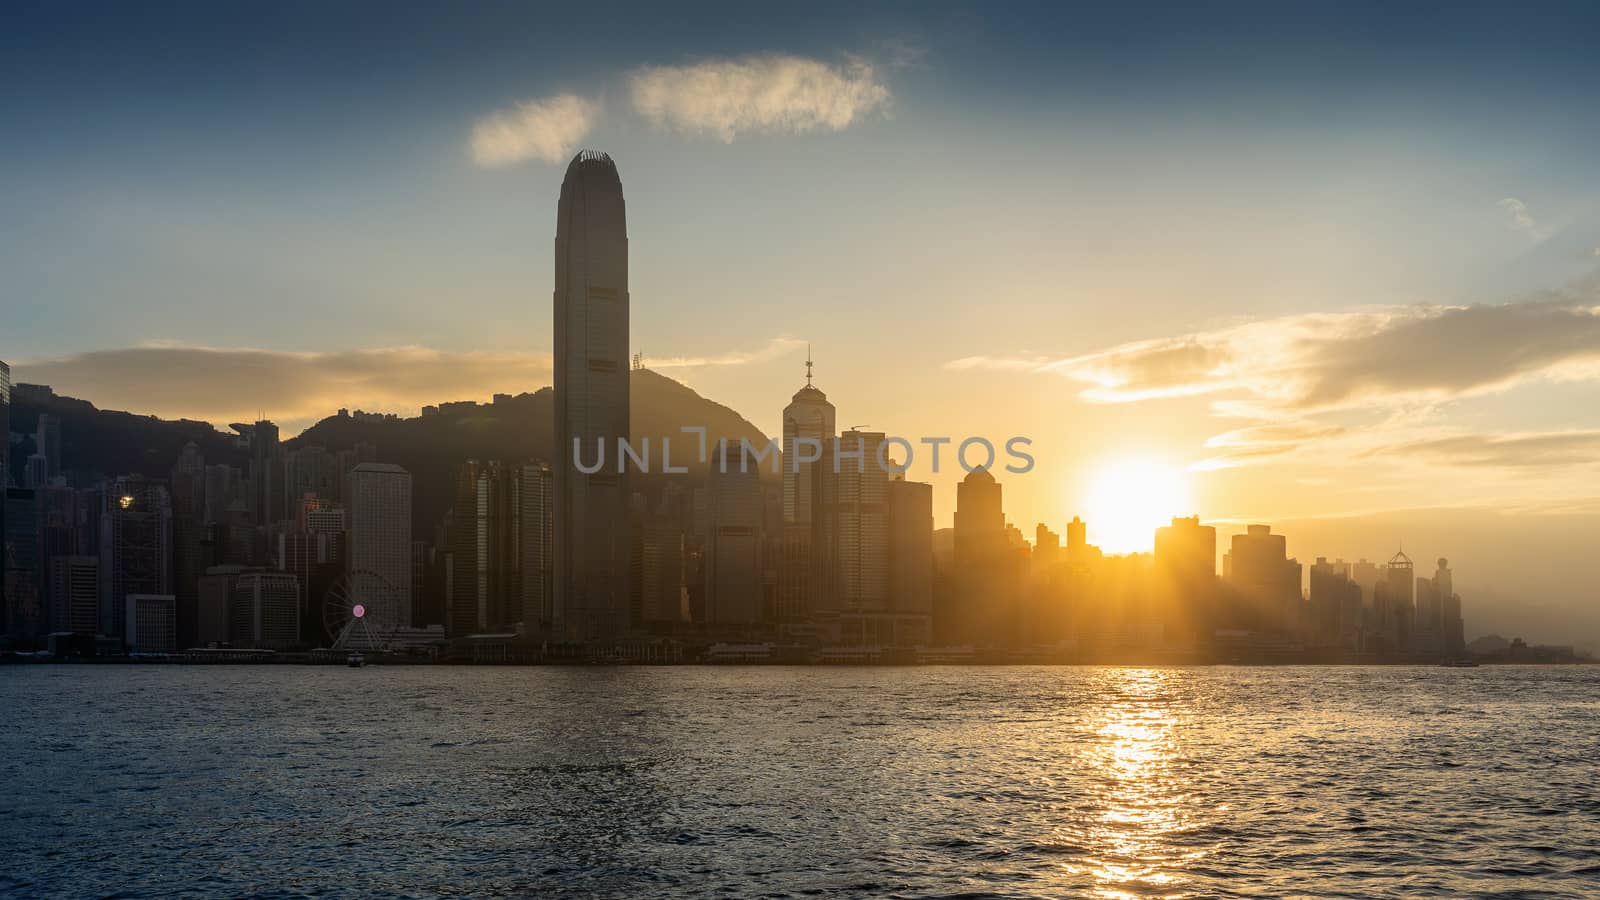 Beautiful sunset at Hong Kong. by gutarphotoghaphy